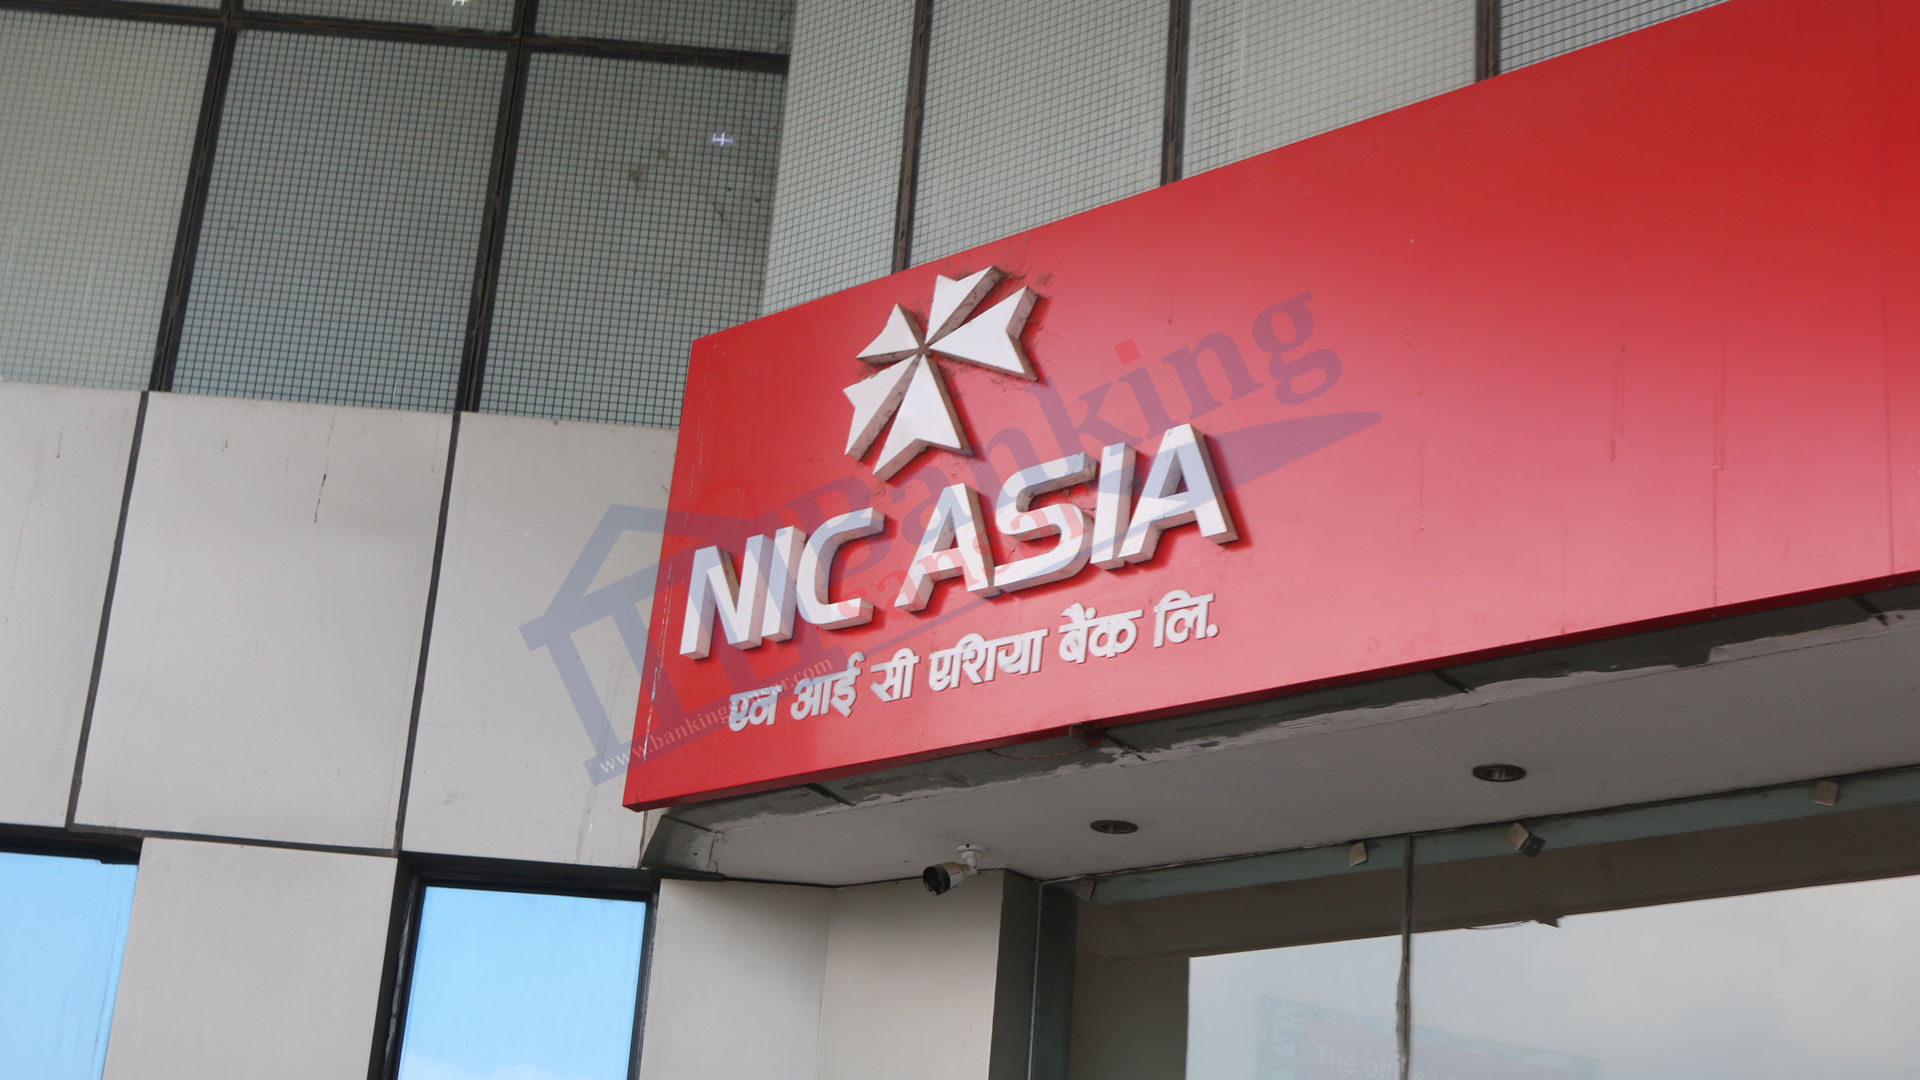 NIC ASIA Bank